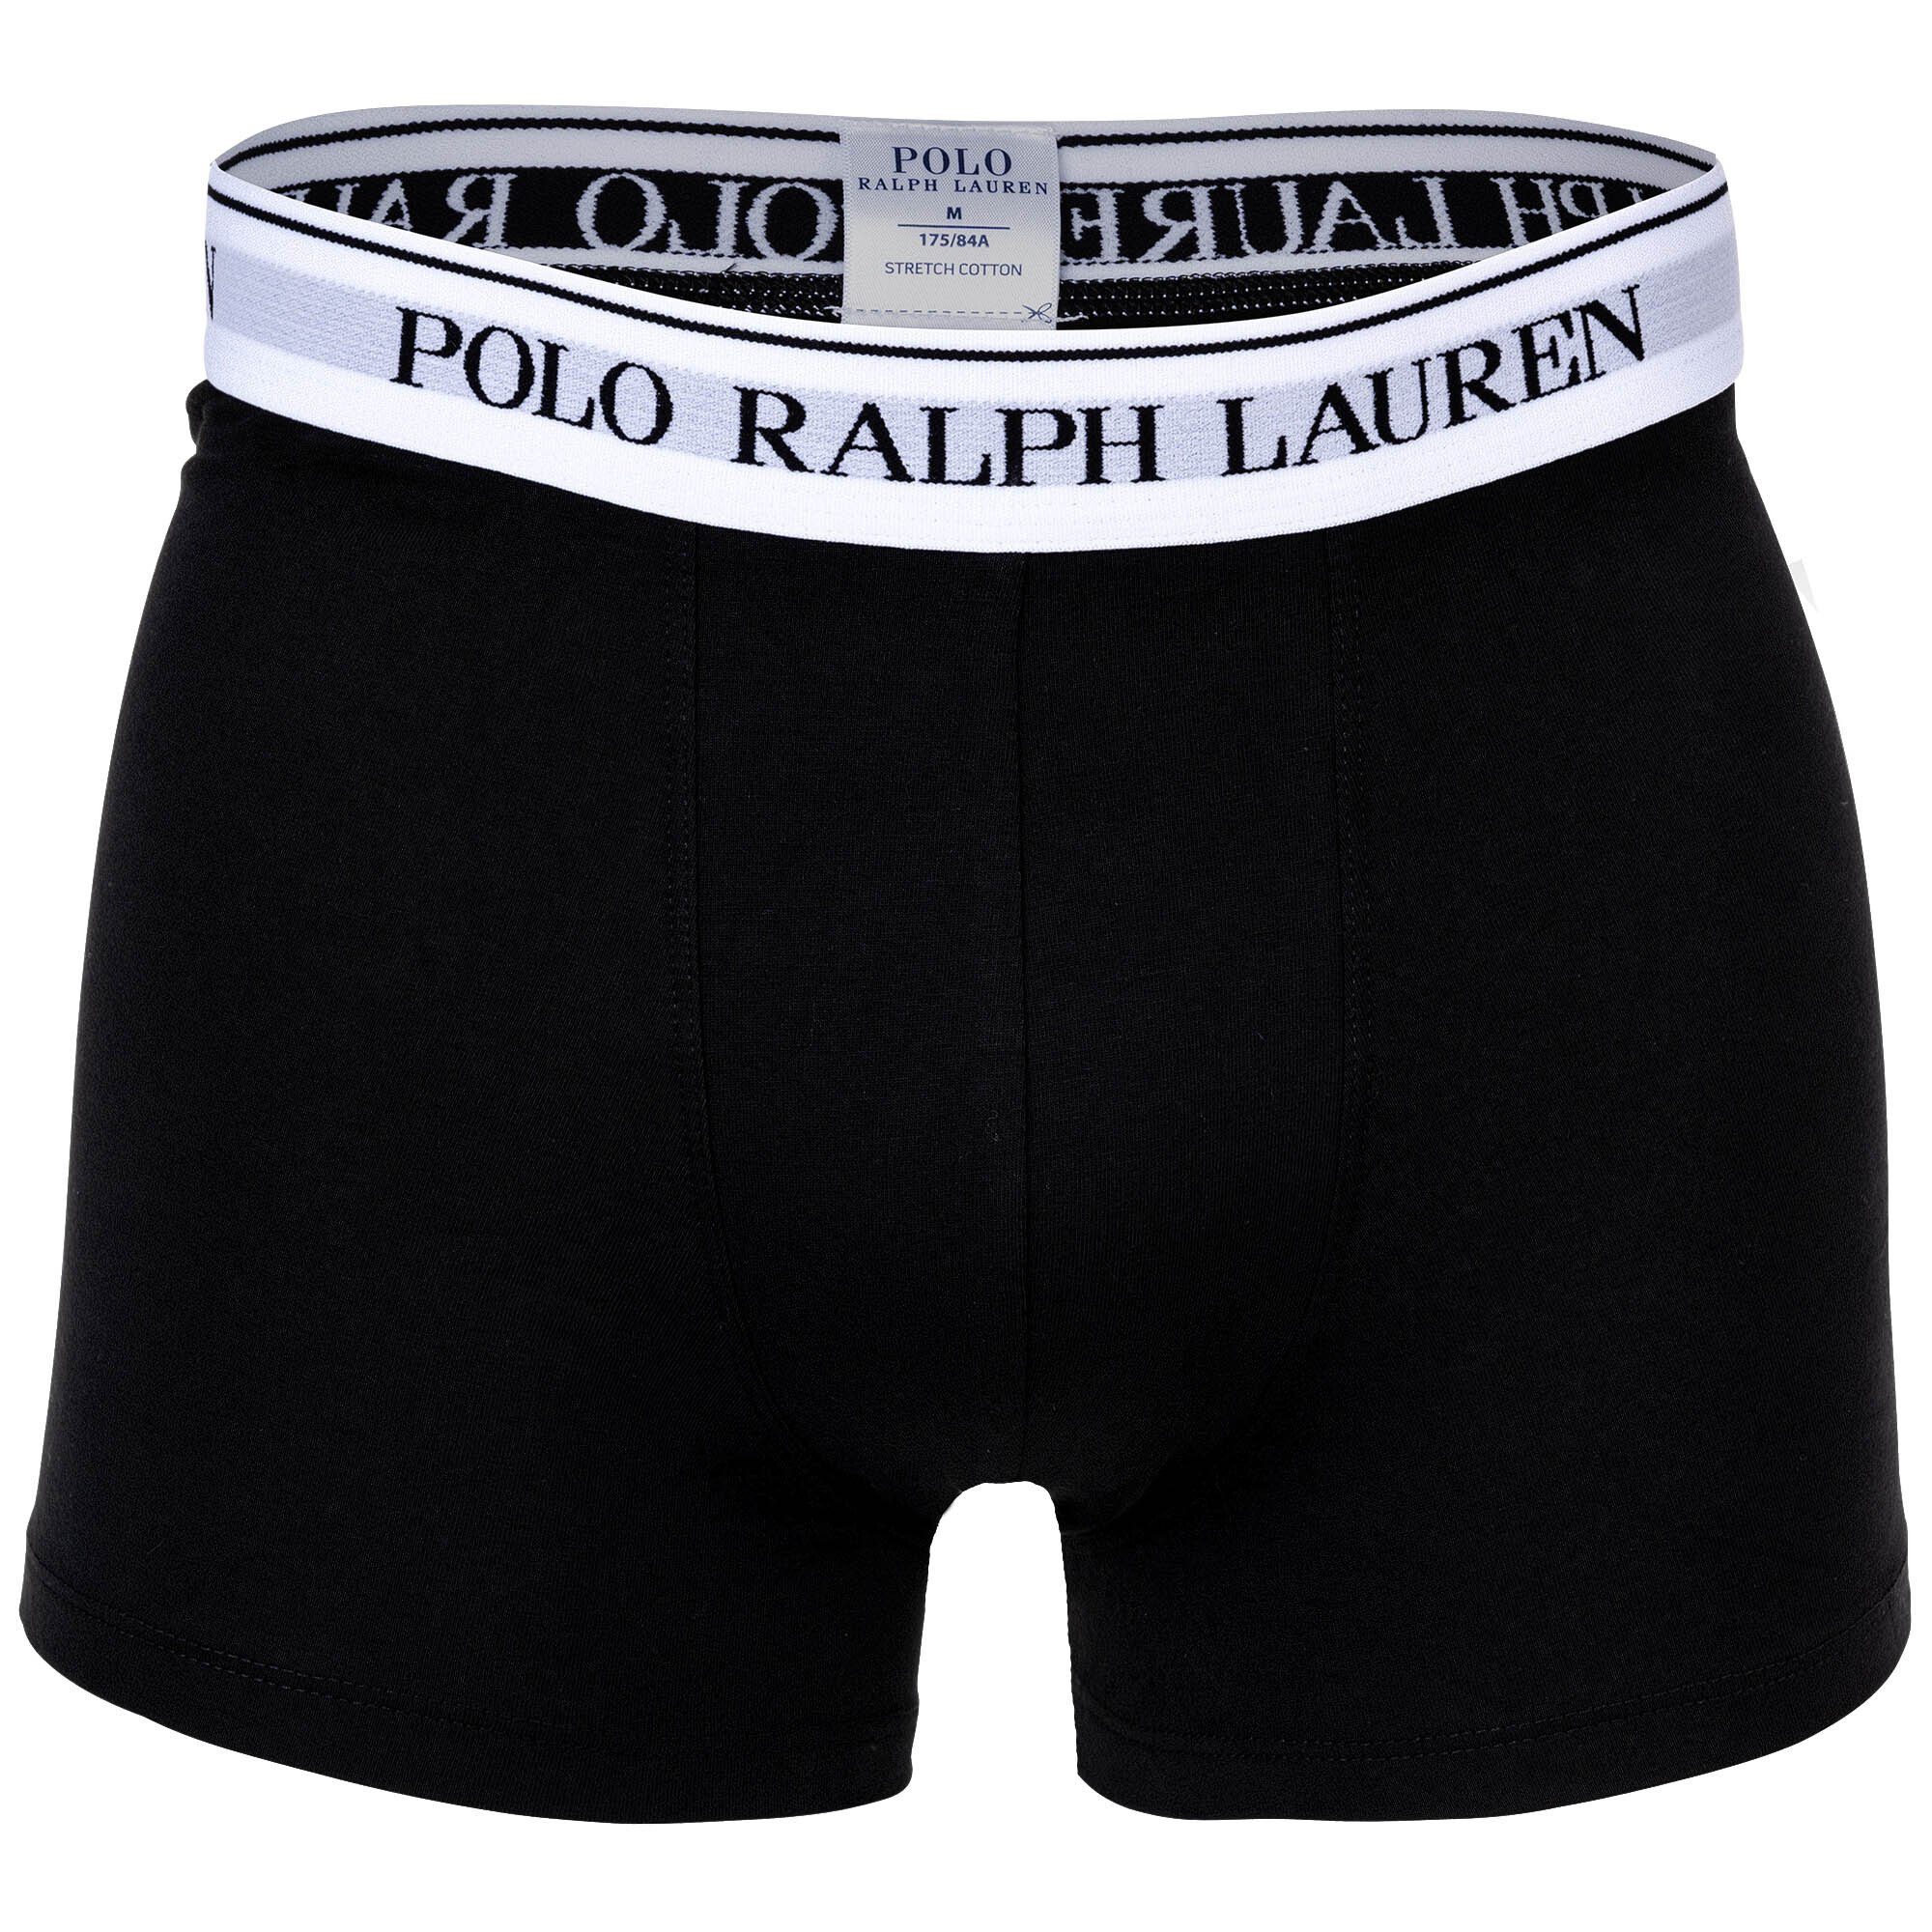 5er - Pack Schwarz/Grau/Weiß TRUNK-5 Herren Boxer CLSSIC Shorts, Ralph Lauren Polo Boxer